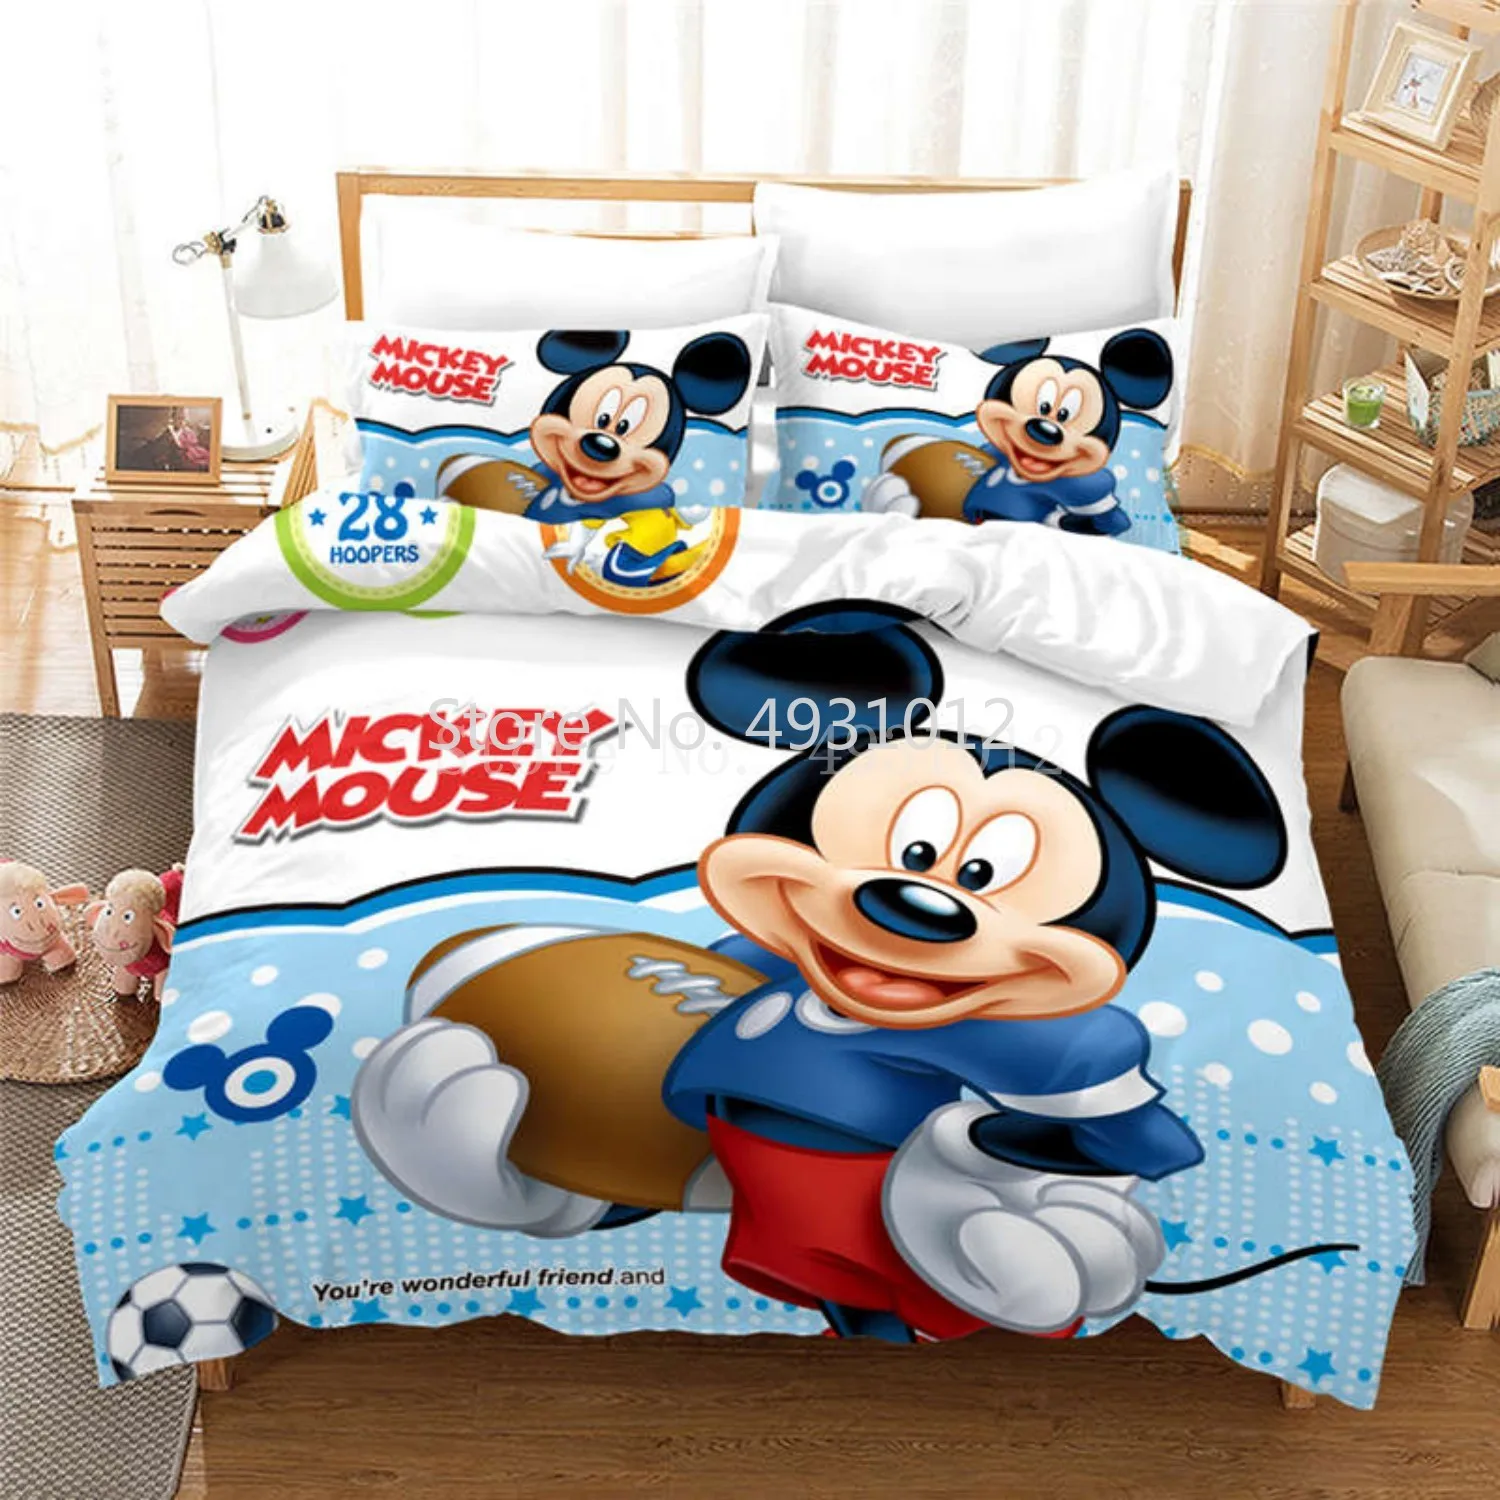 Disney Basketball Mickey Mouse Bedding Set Quilt Duvet Cover for Kids Bedroom Decor Single Queen King set